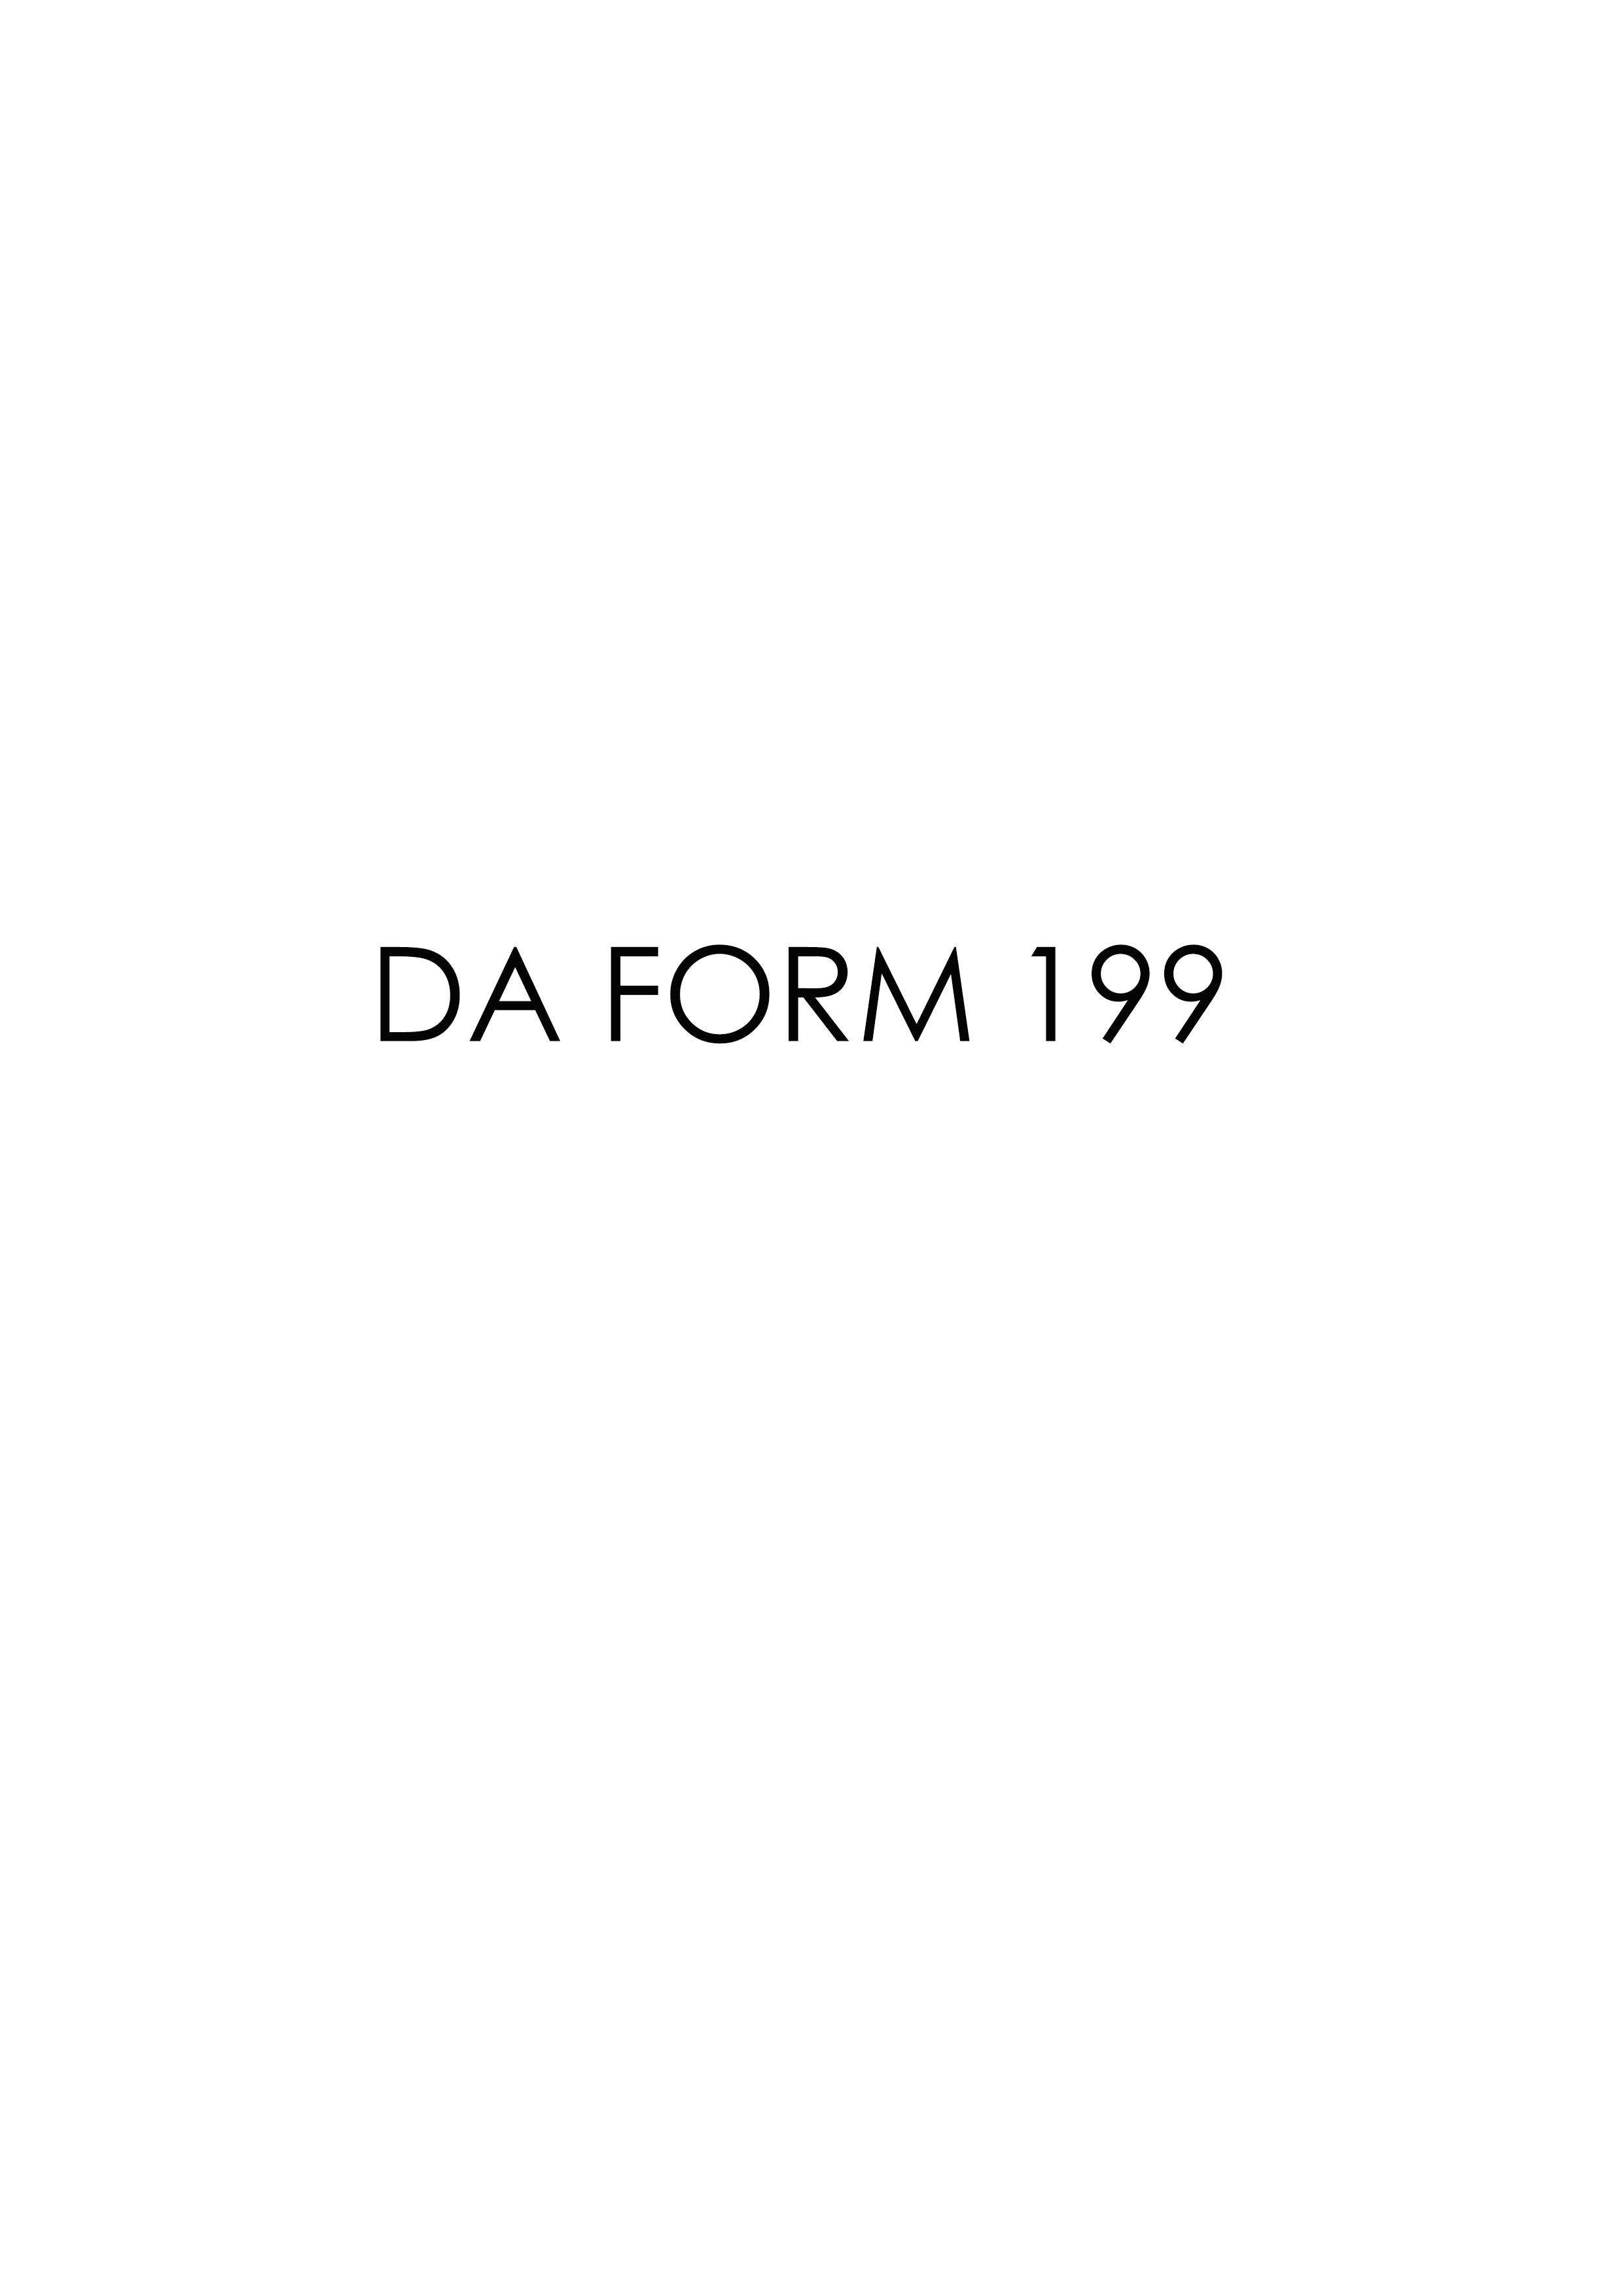 Download Fillable da Form 199